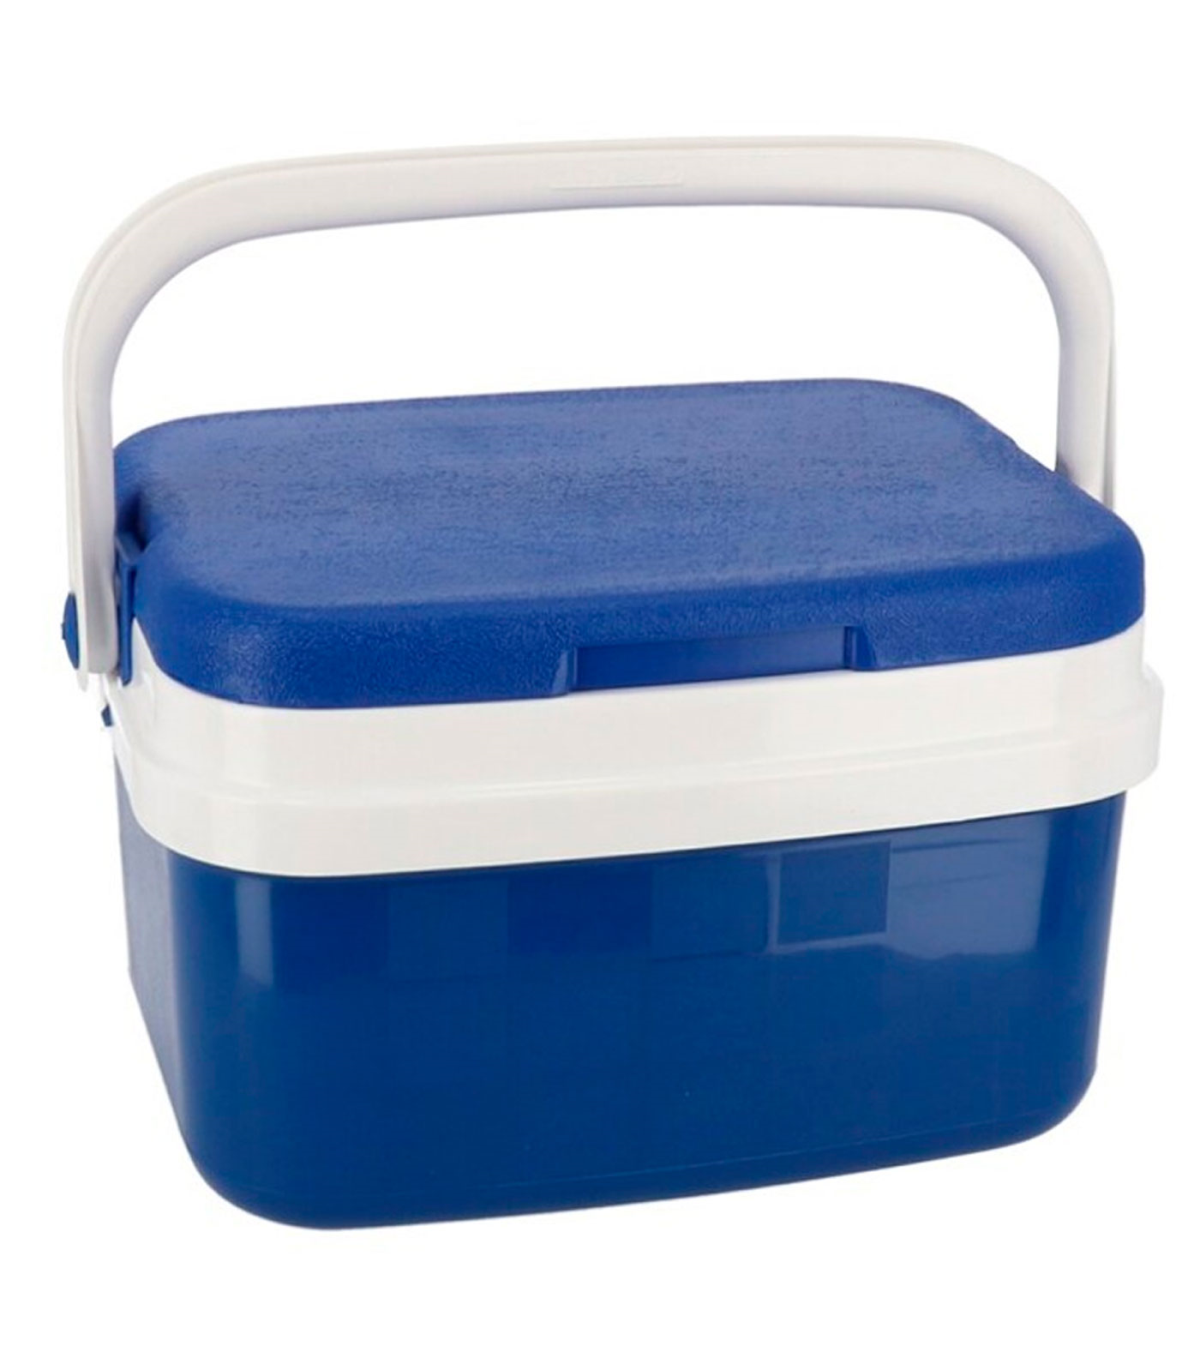 Nevera portátil con asa, 5 litros, polipropileno,porta alimentos para  playa, acampada, camping, 19 x 26 x 20 cm, color azul y bl